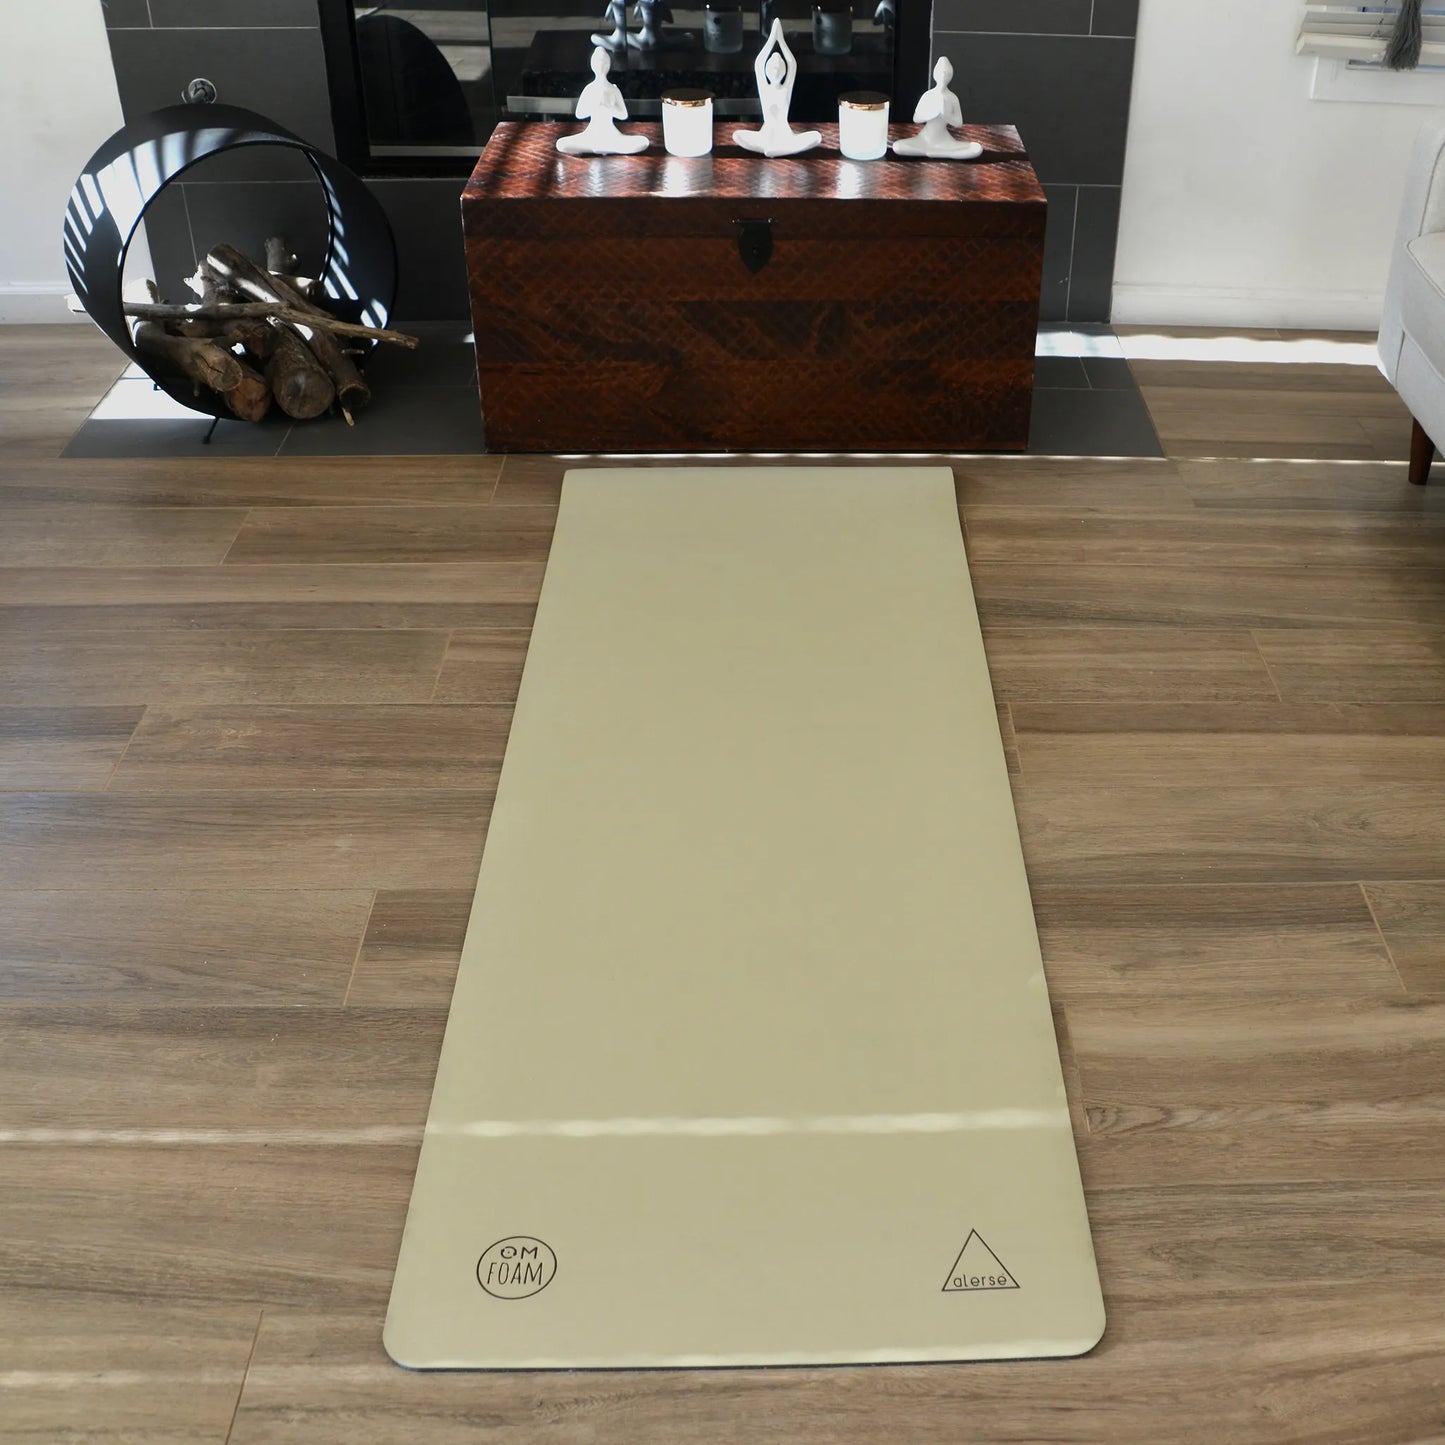 Tan yoga mat lying flat.